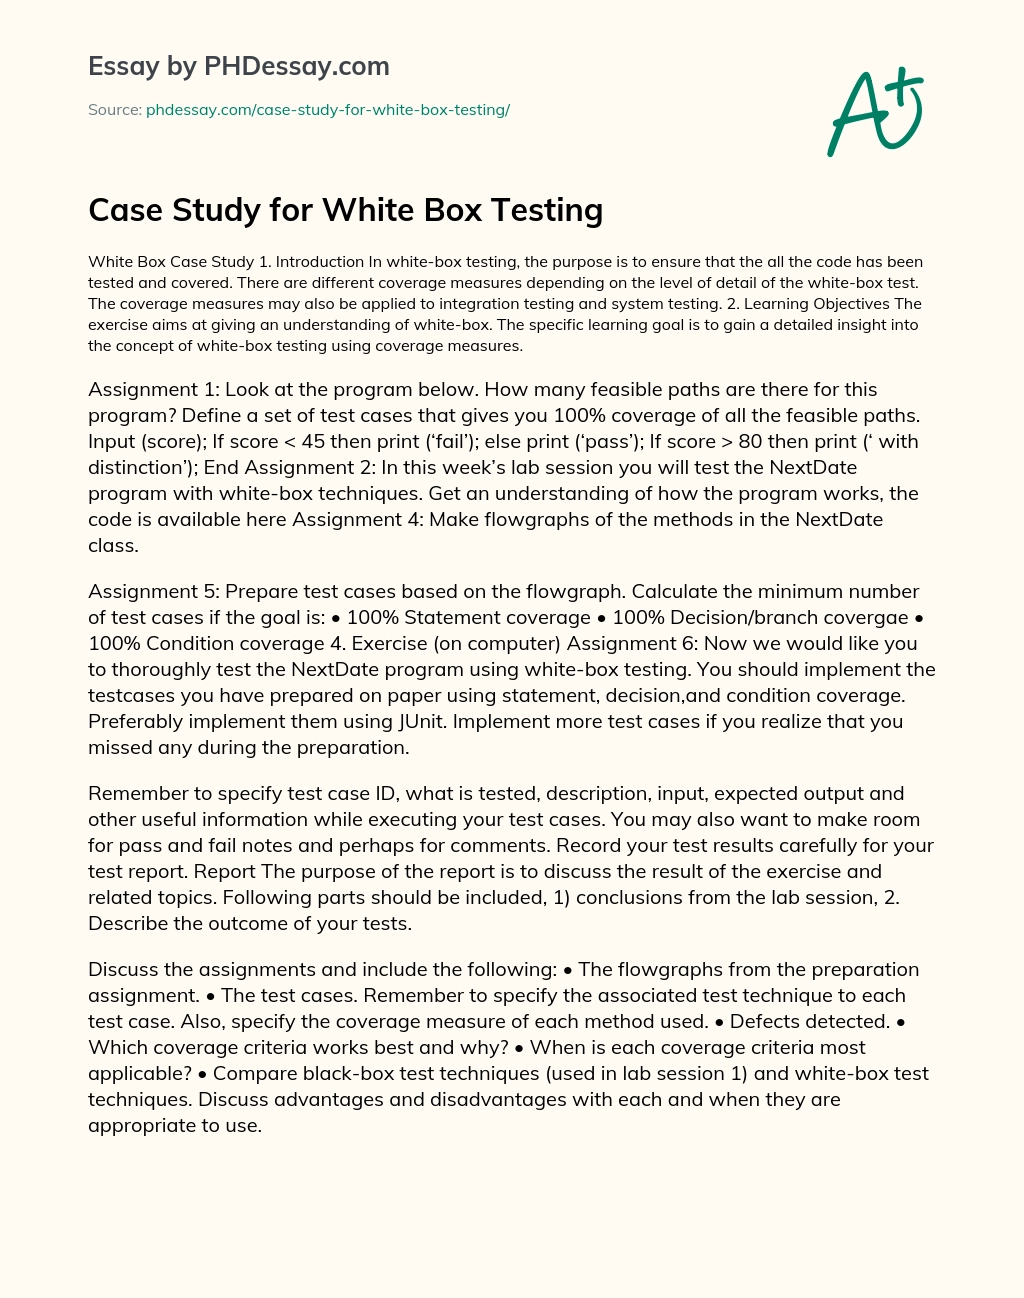 Case Study for White Box Testing essay